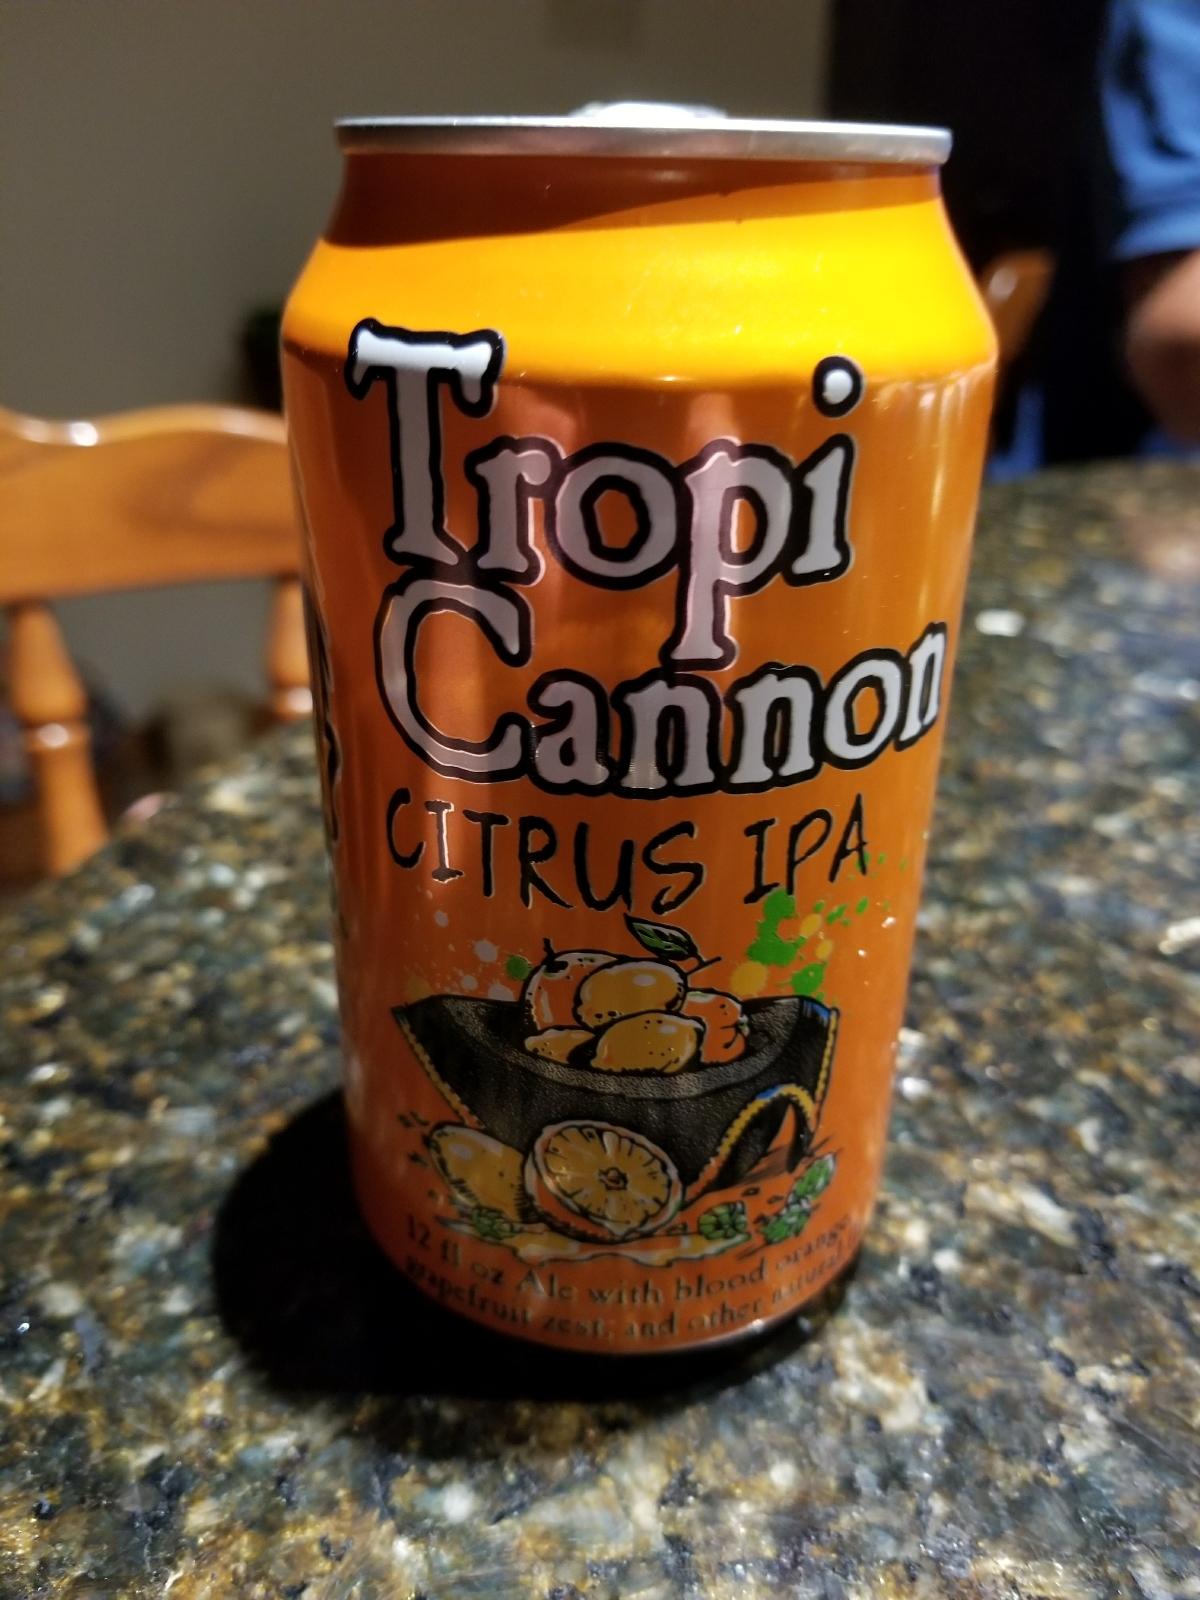 Tropic Cannon Citrus IPA